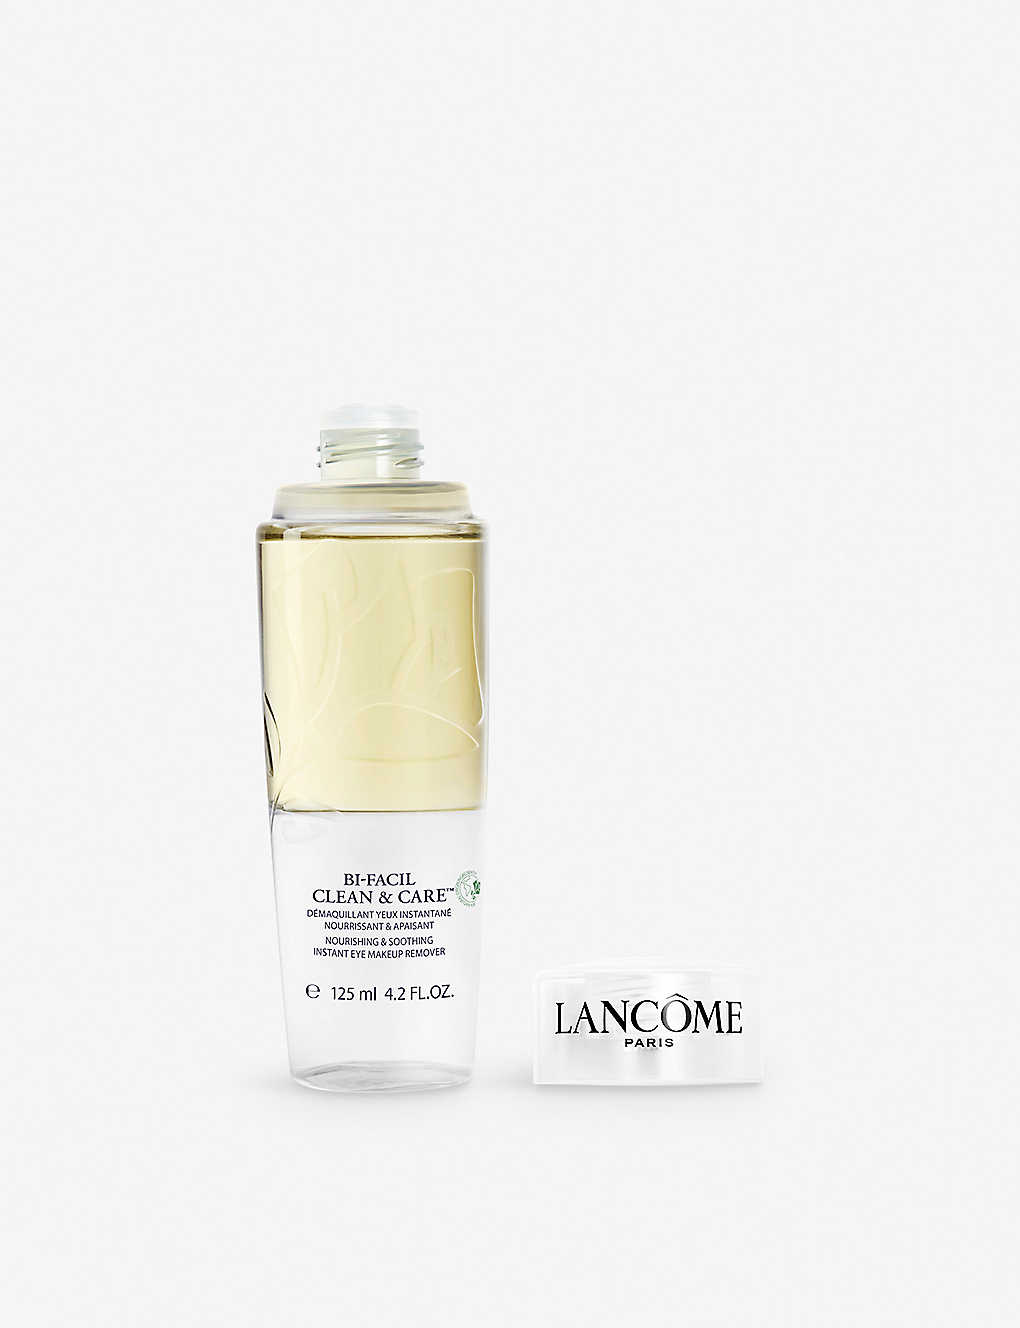 Lancôme Lancome Bi-facil Clean & Care Eye Make-up Remover In White